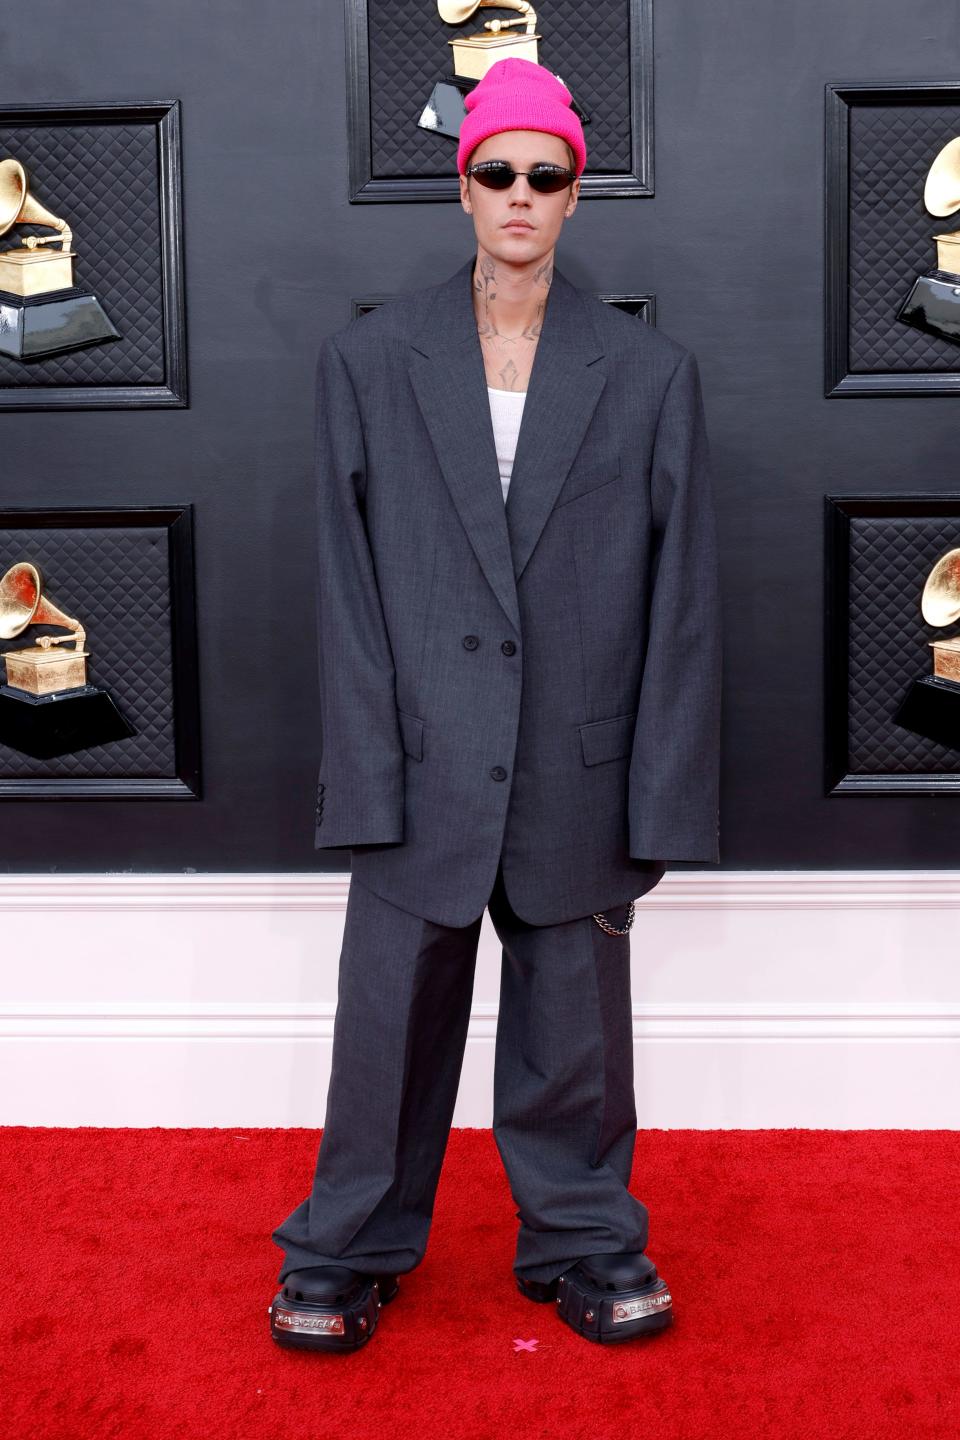 Justin Bieber attends the 2022 Grammy Awards.